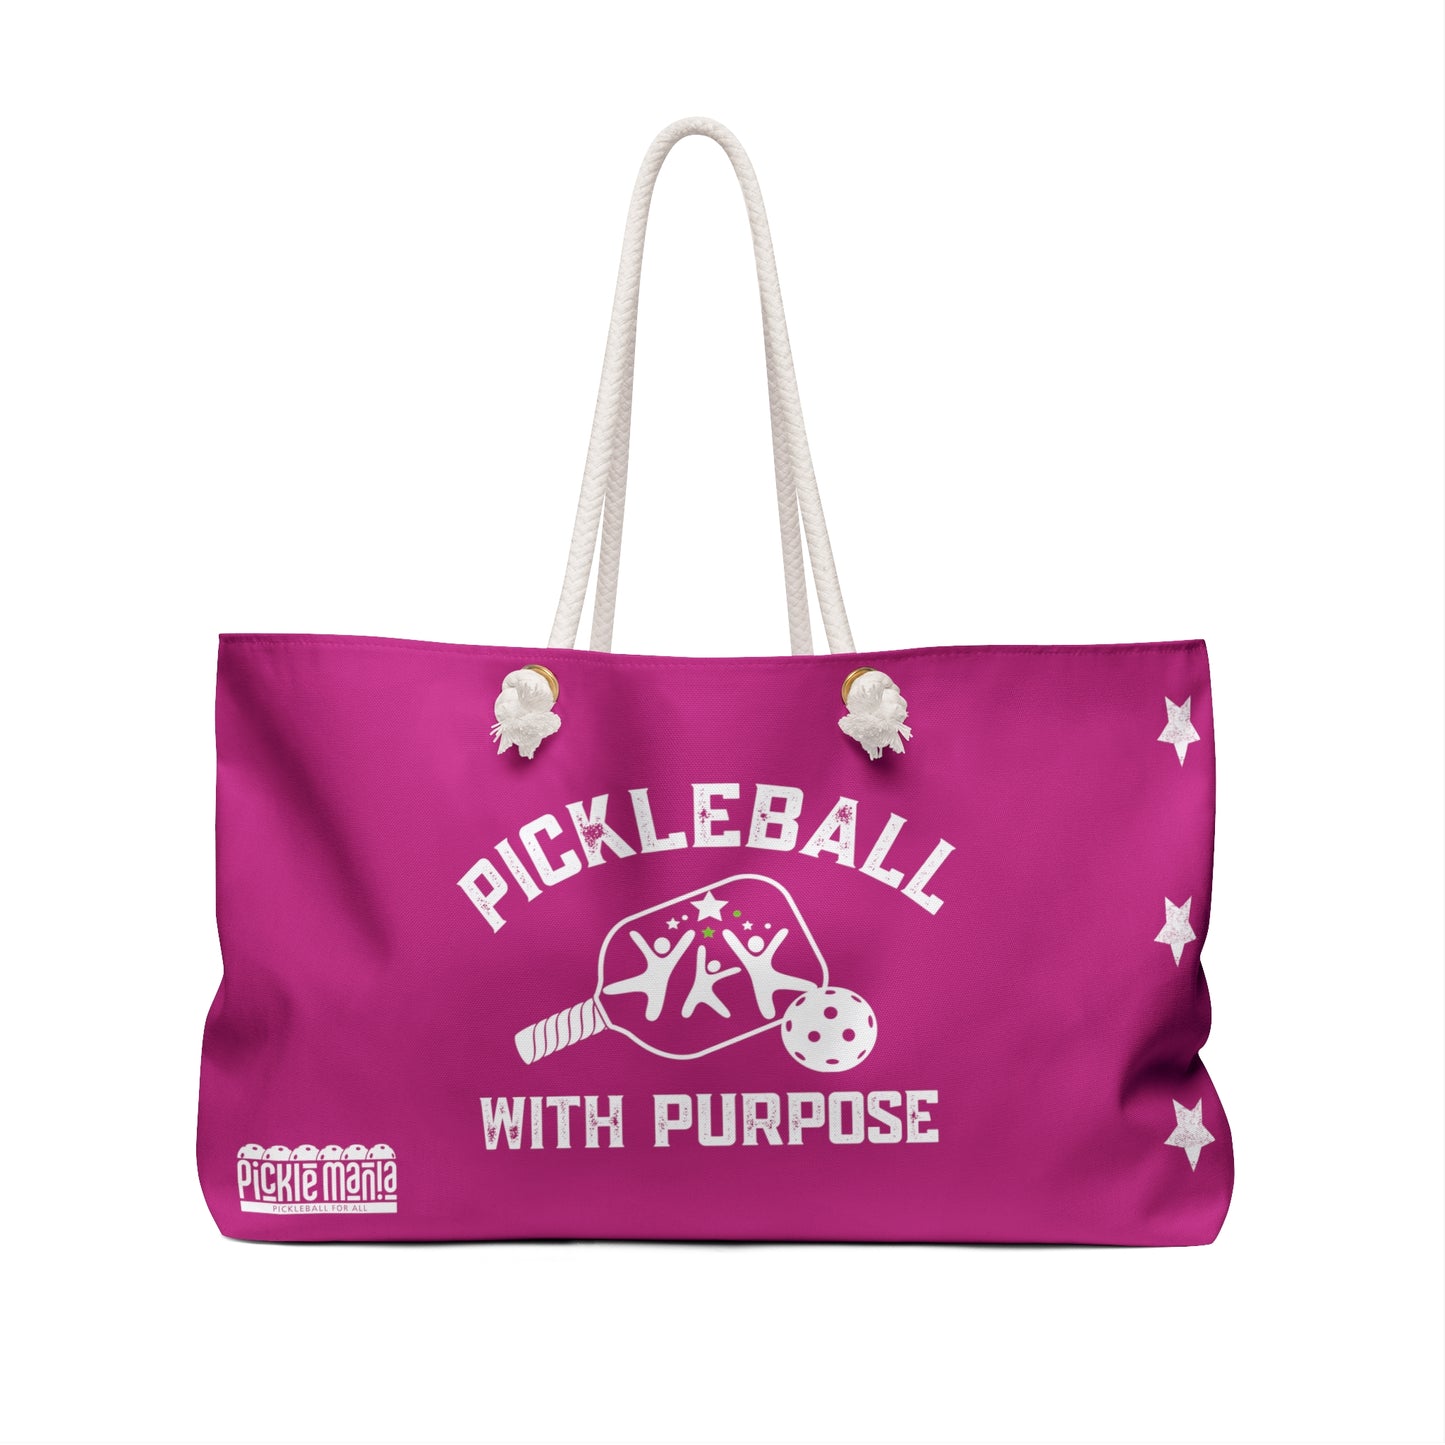 Picklemania Oversided - Weekender Pickleball Bag - customize name